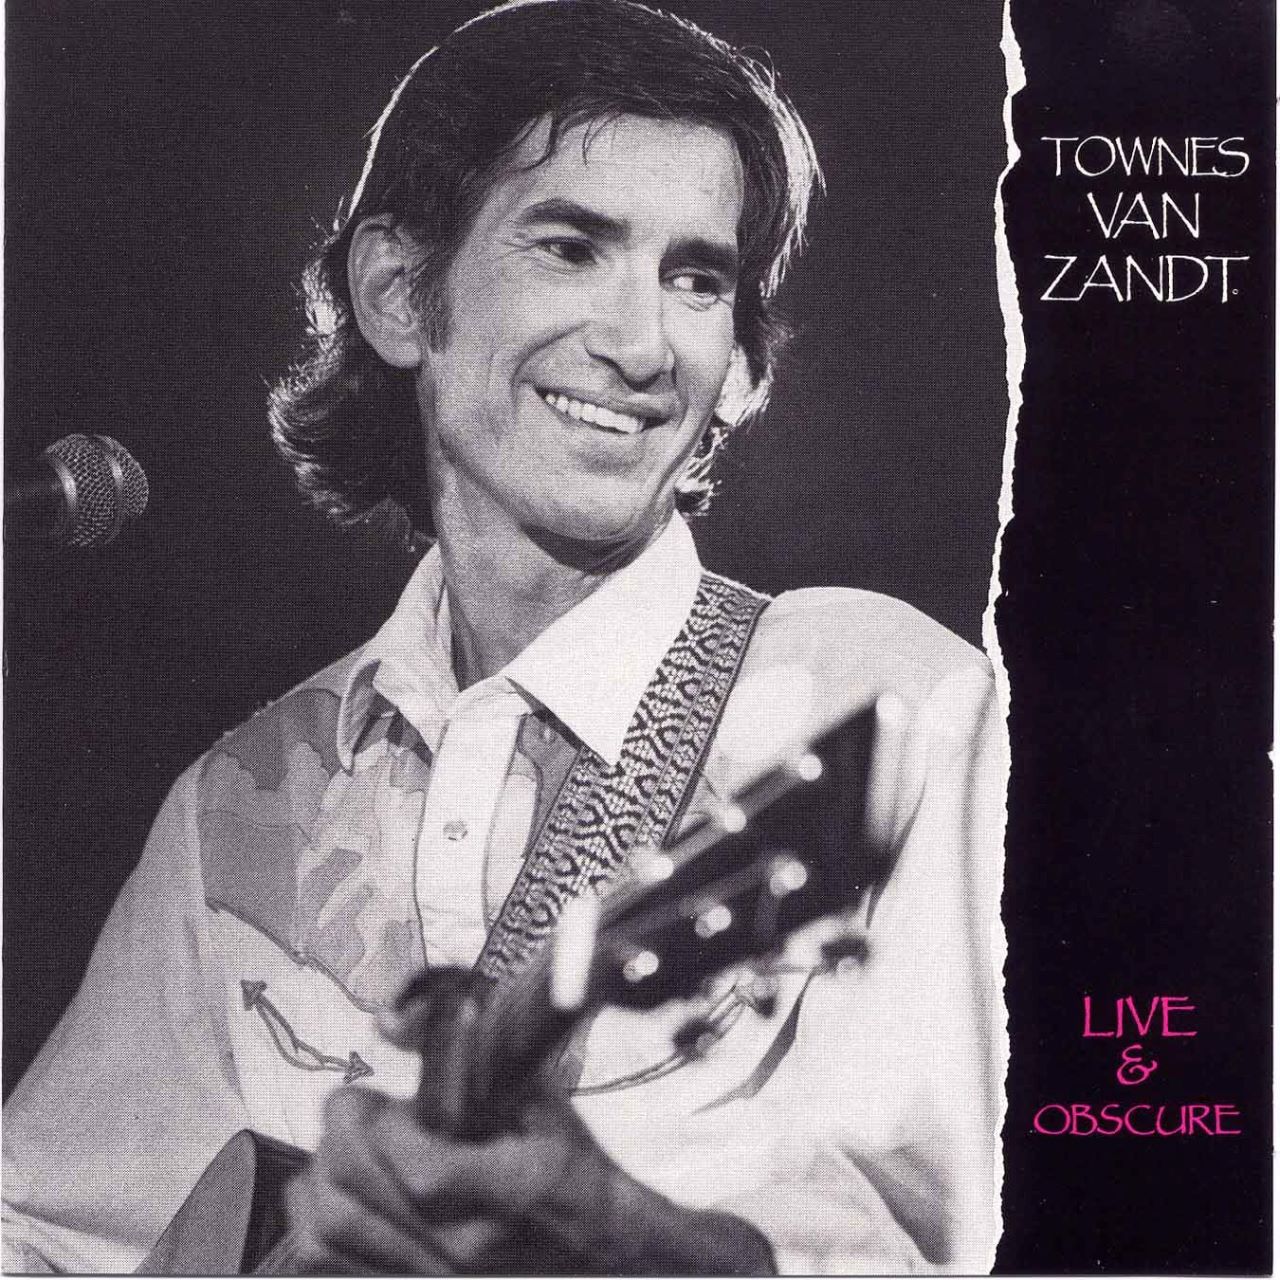 Townes Van Zandt - Live & Obscure cover album